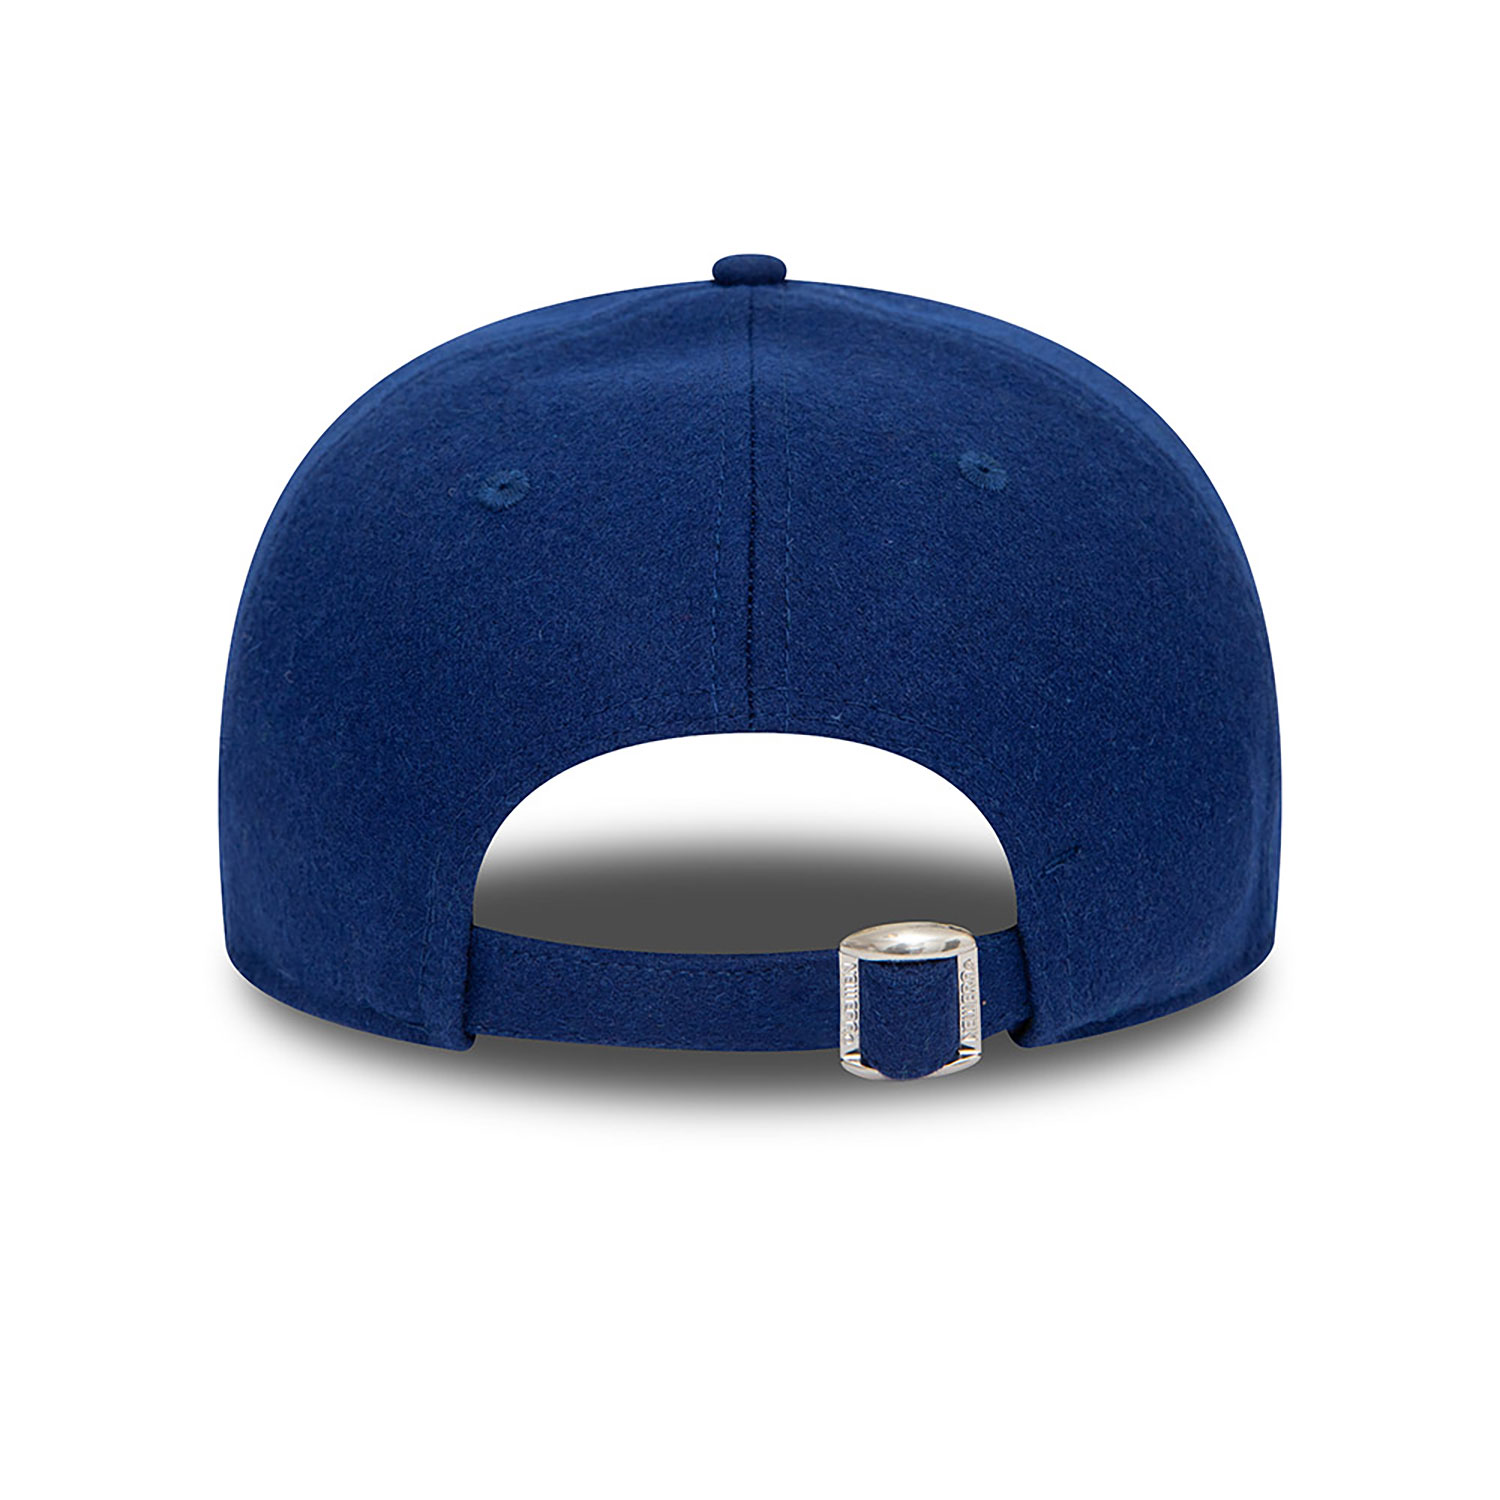 Chicago Cubs Heritage Series Dark Blue Retro Crown 9FIFTY Strapback Cap